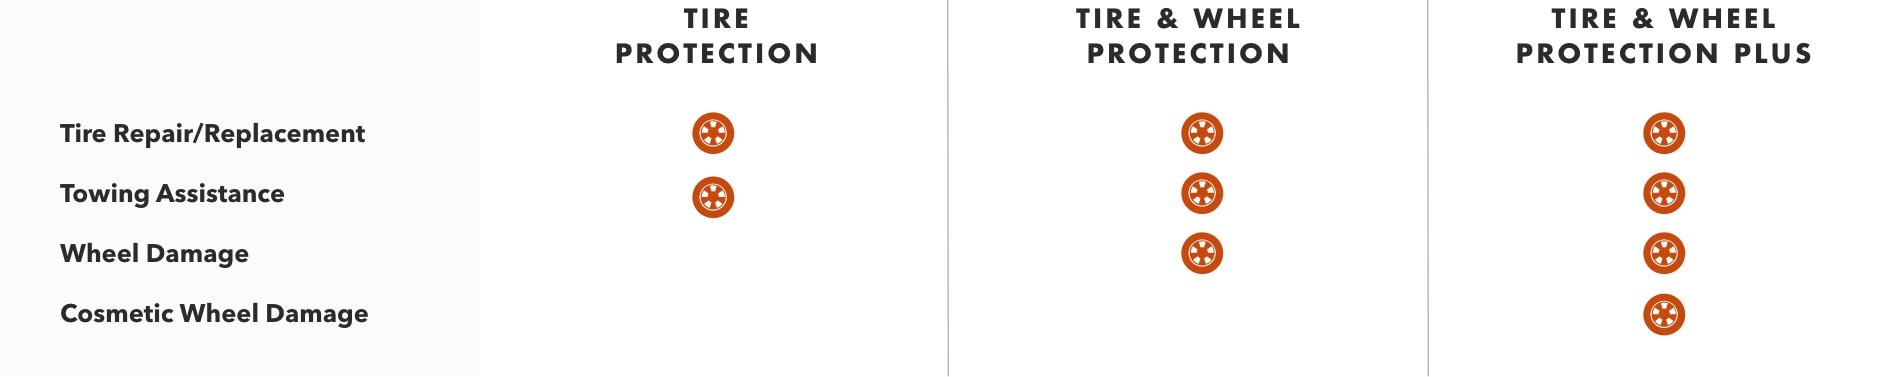 Buick Protection Tire & Wheel Key Benefits Comparison Chart